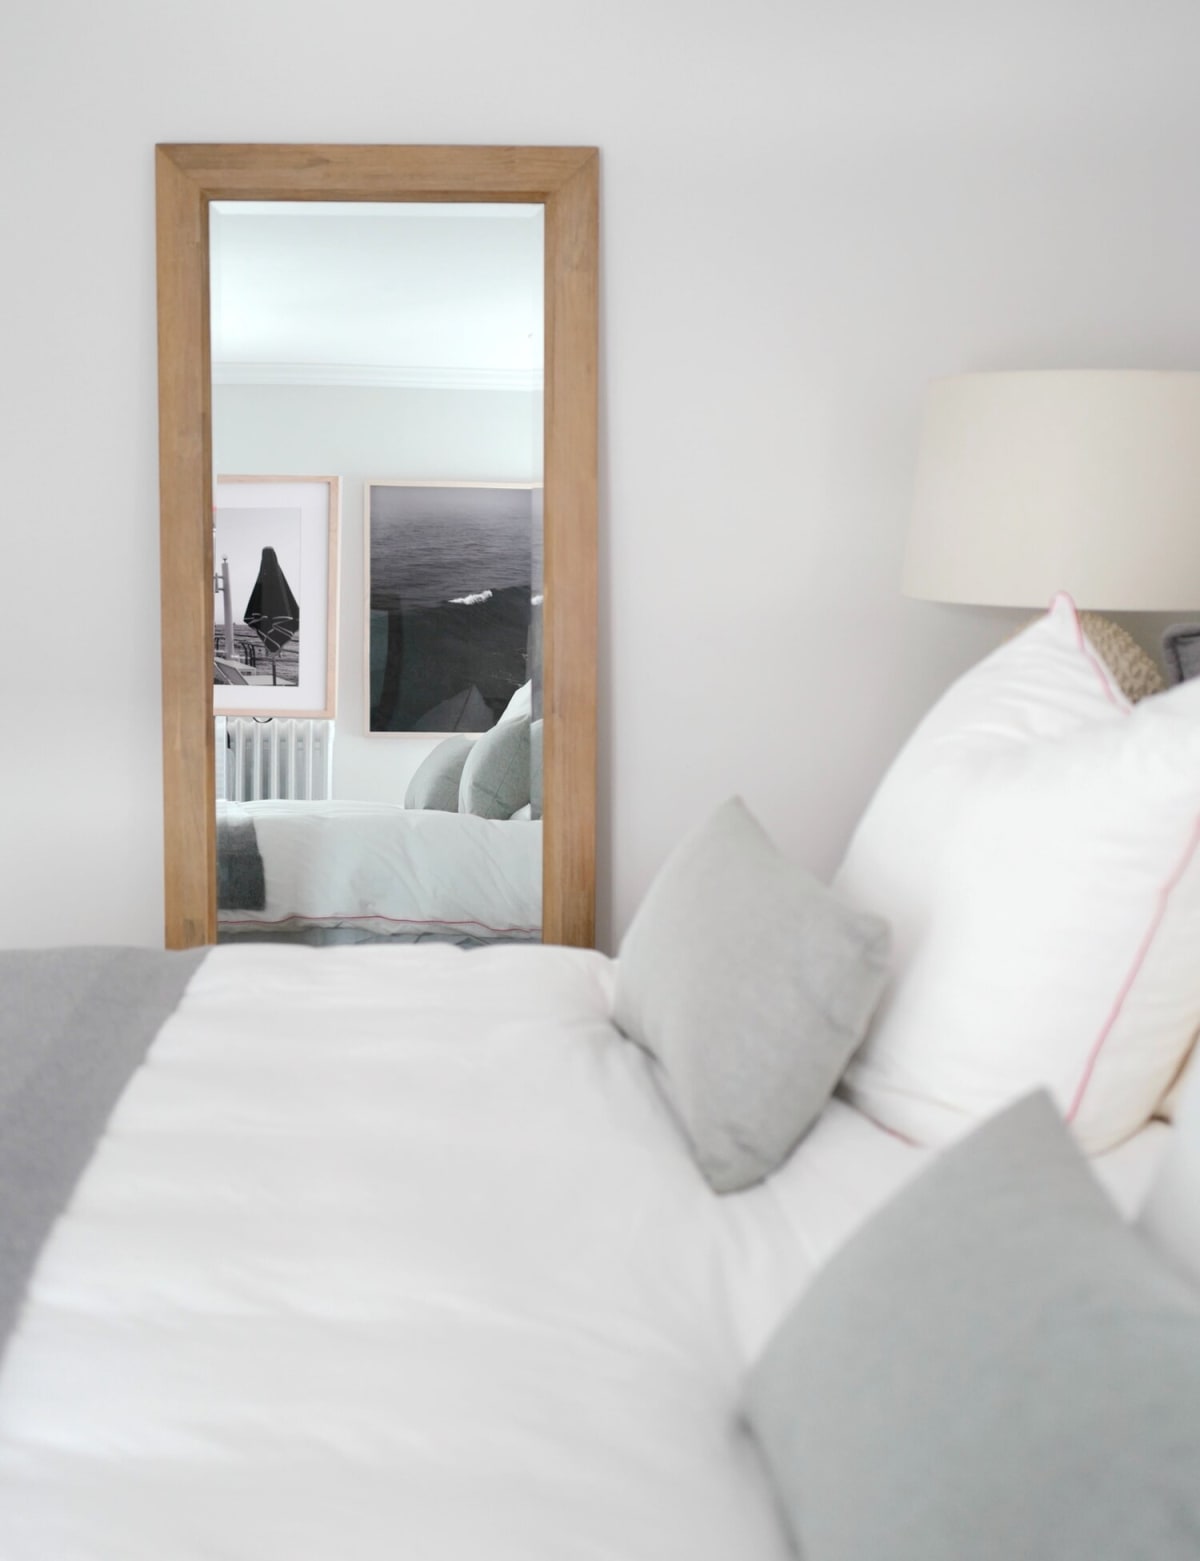 5 Best Small Bedroom Storage Ideas (Practical & Renter-friendly